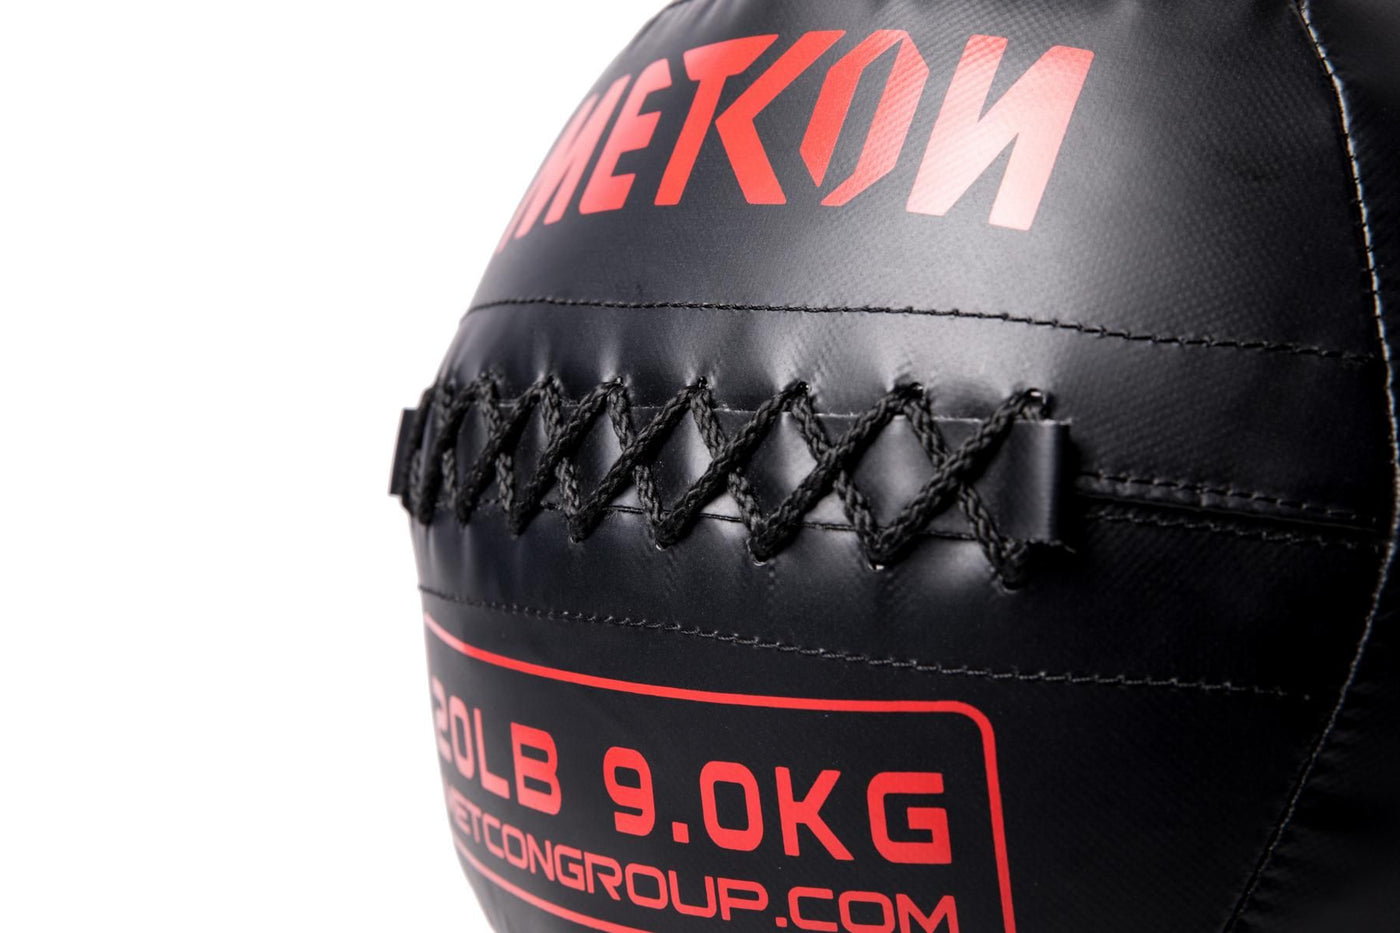 Metcon Wall Ball-9kg